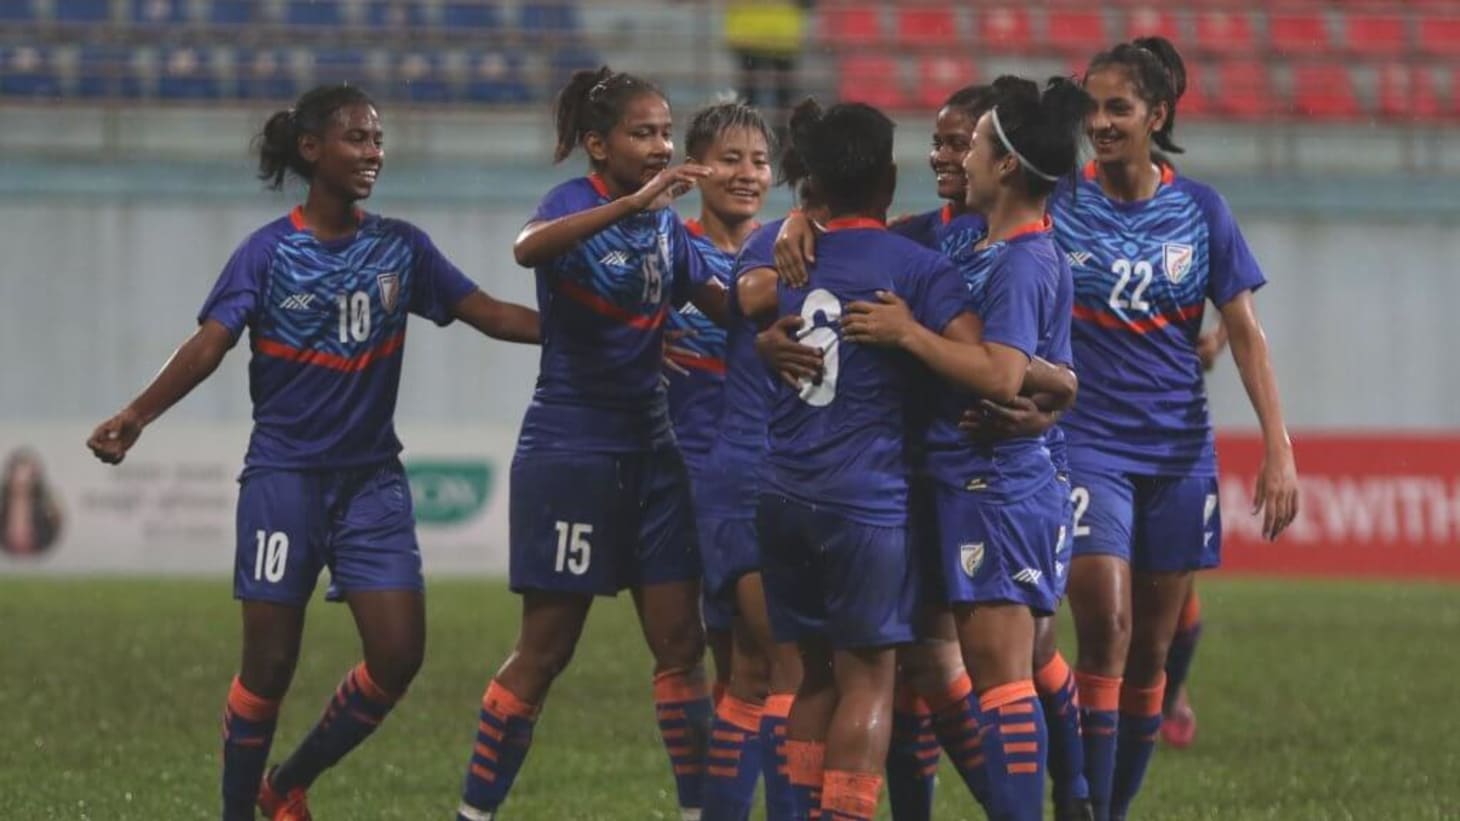 Nepal leads SAFF U-15 Women's Championship